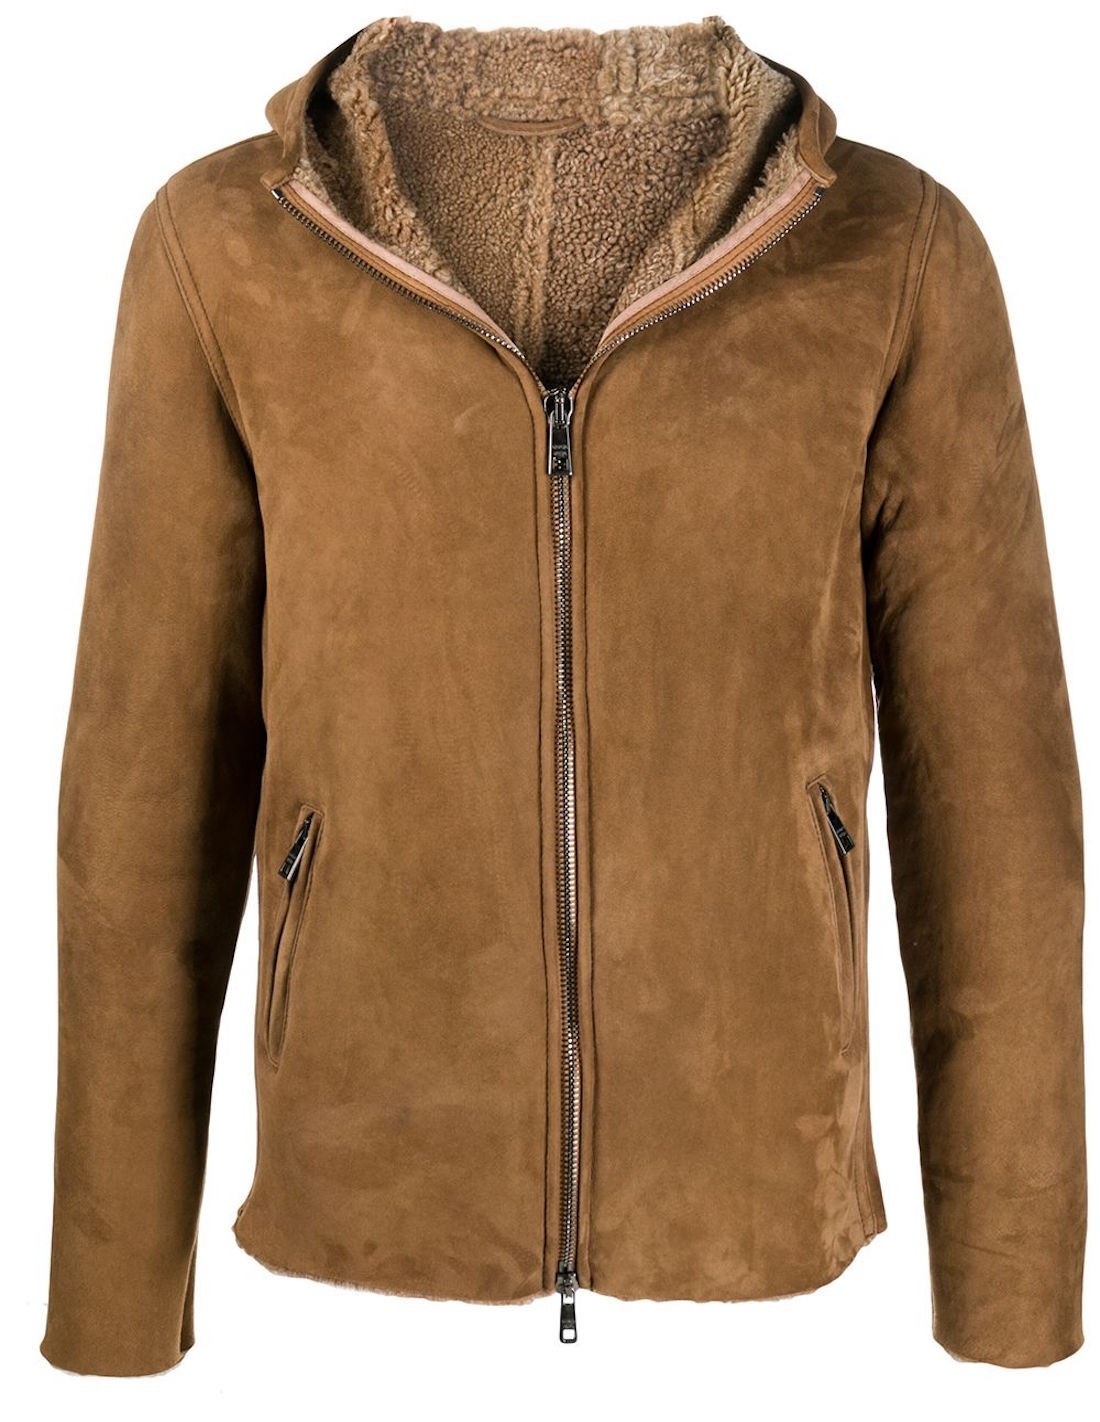 GIORGIO BRATO short zipped hooded jacket for men, fall/winter 2020